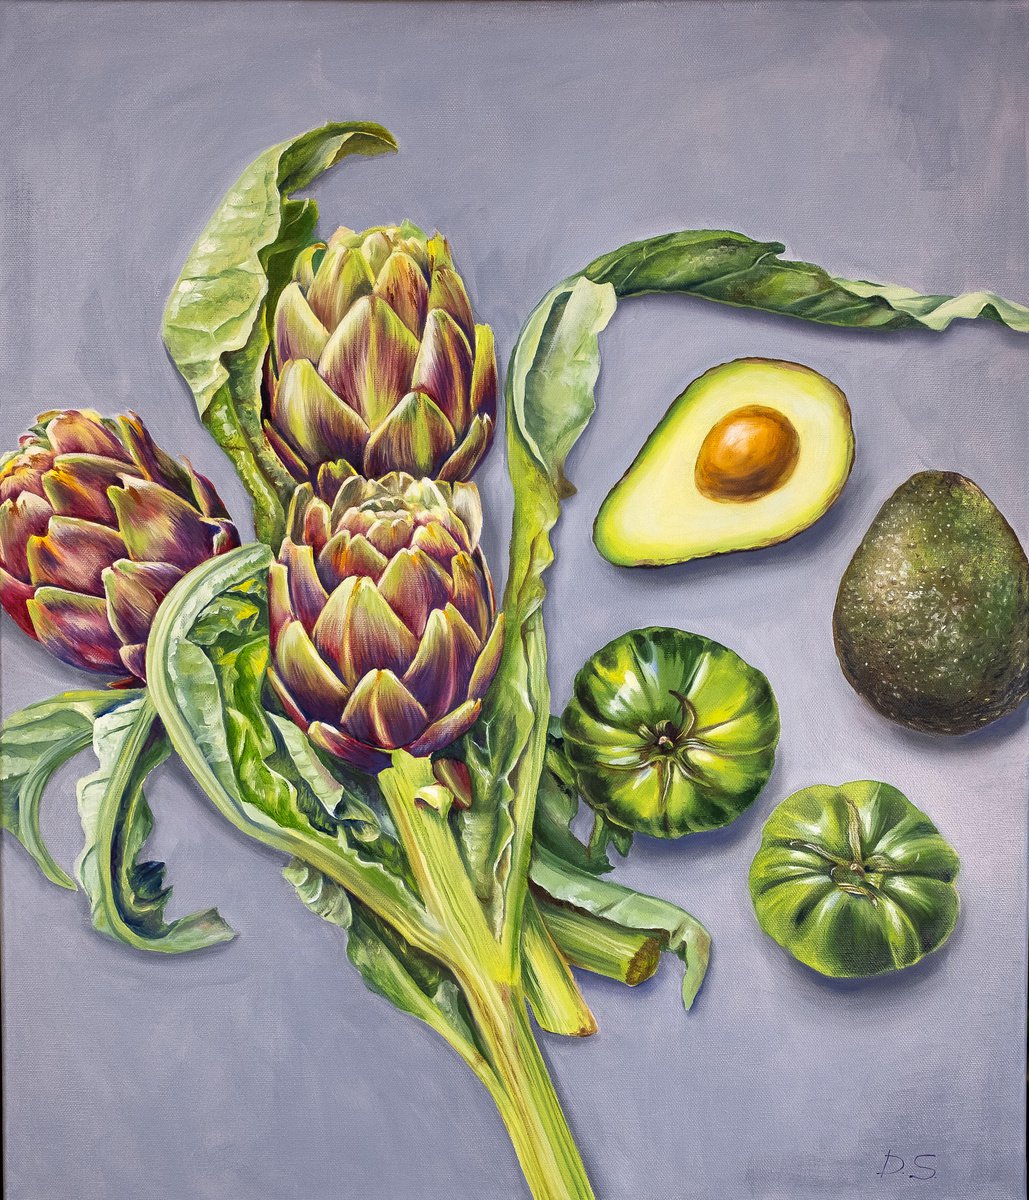 Green Rhapsody / Artichokes, avocado, green tomatoes by Daria Shalik